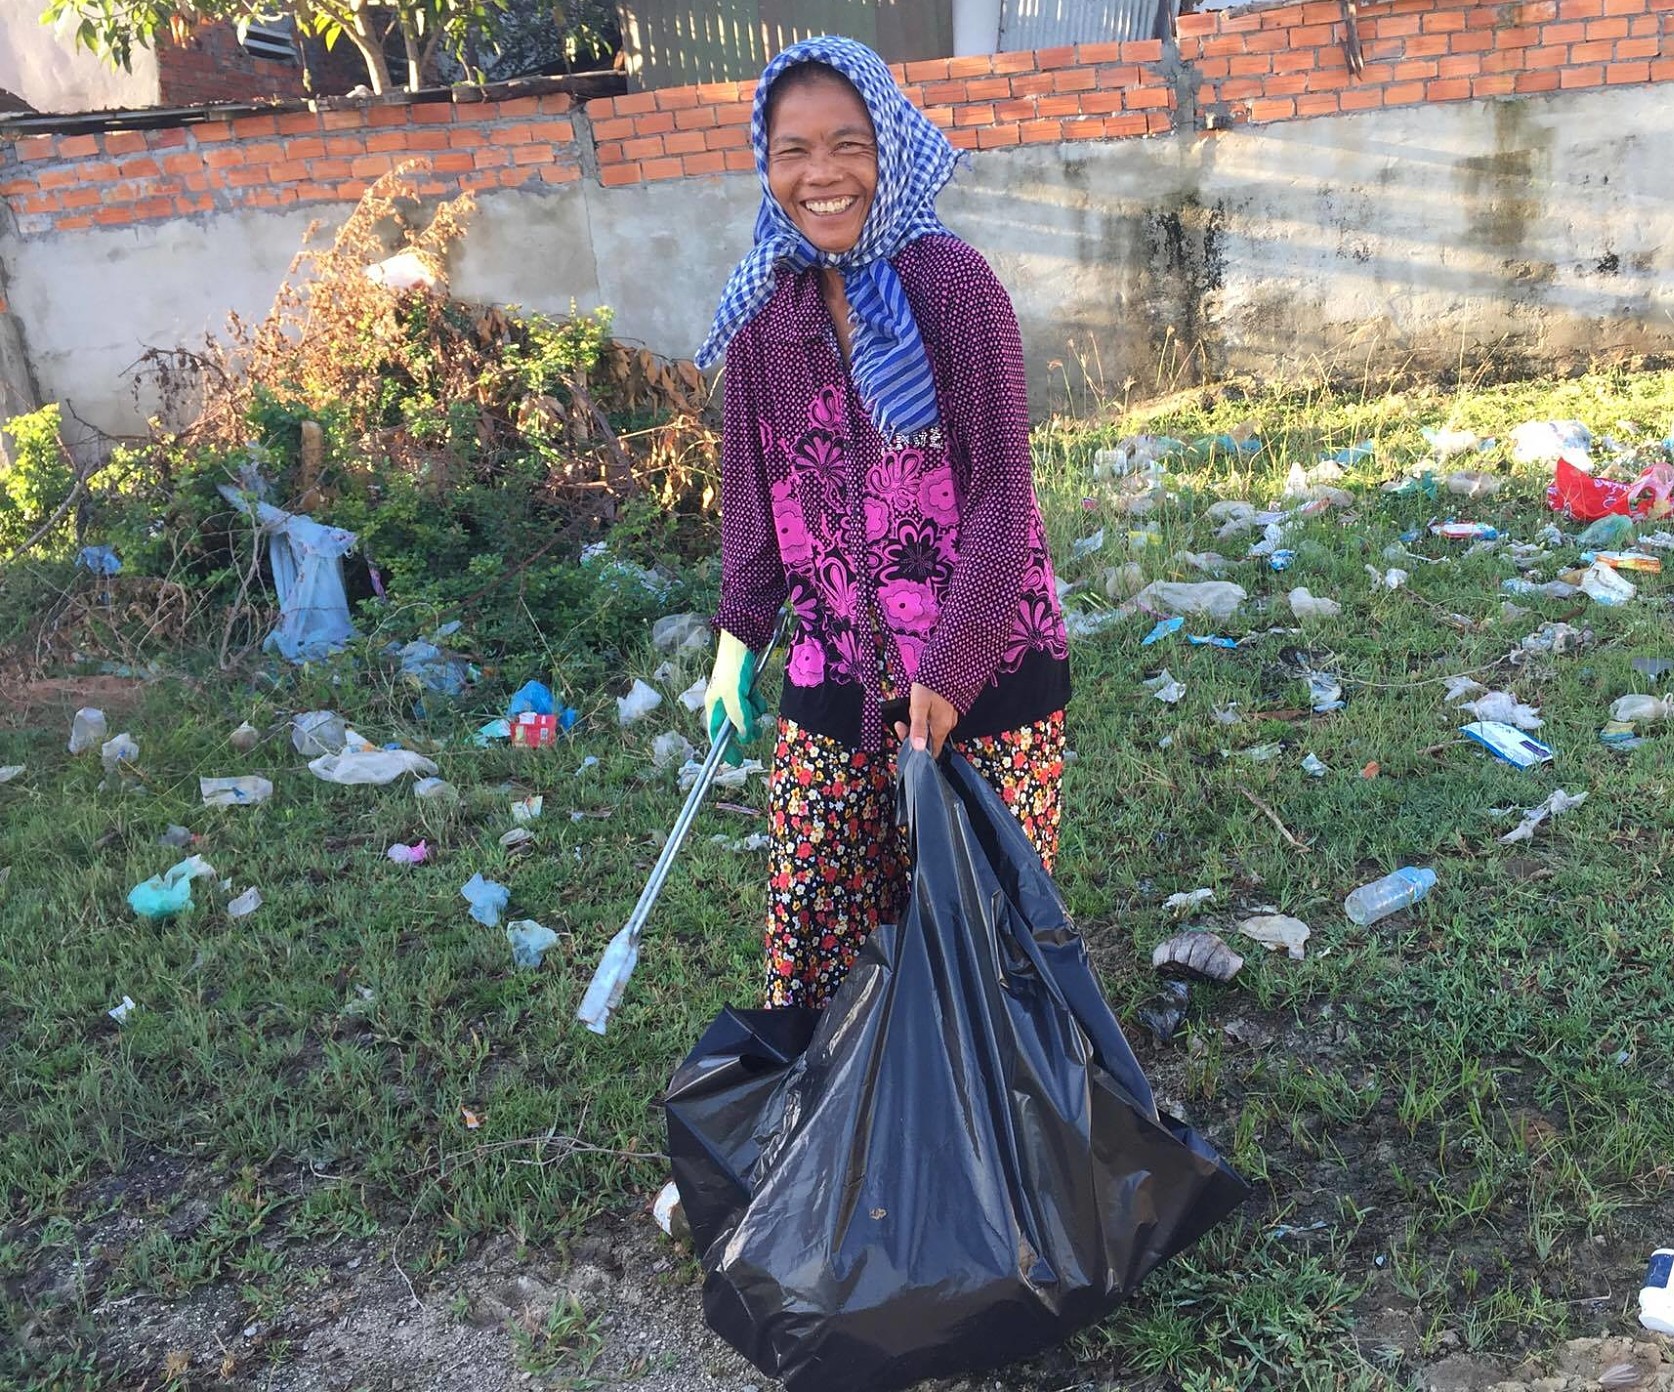 Sok Tho helping create environmental change in Cambodia